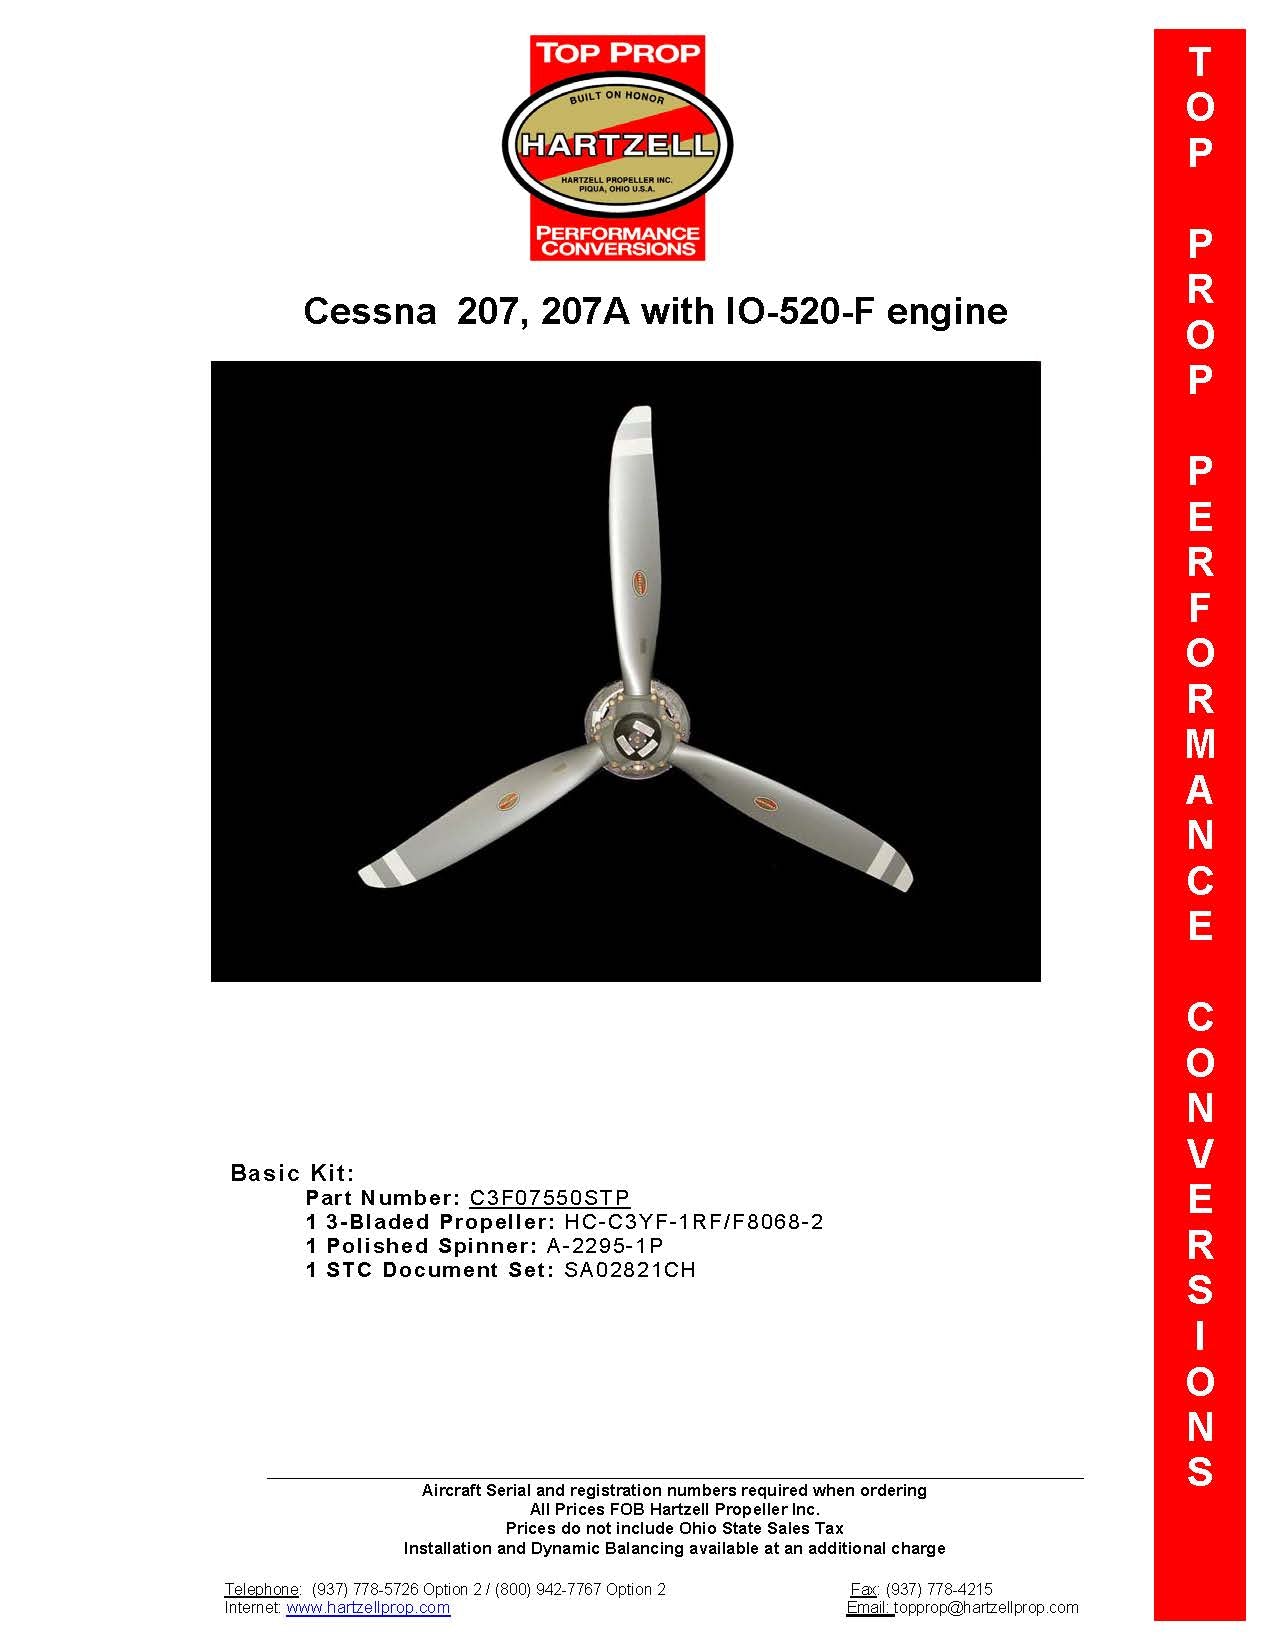 CESSNA-207-C3F07550STP-PAGE-1